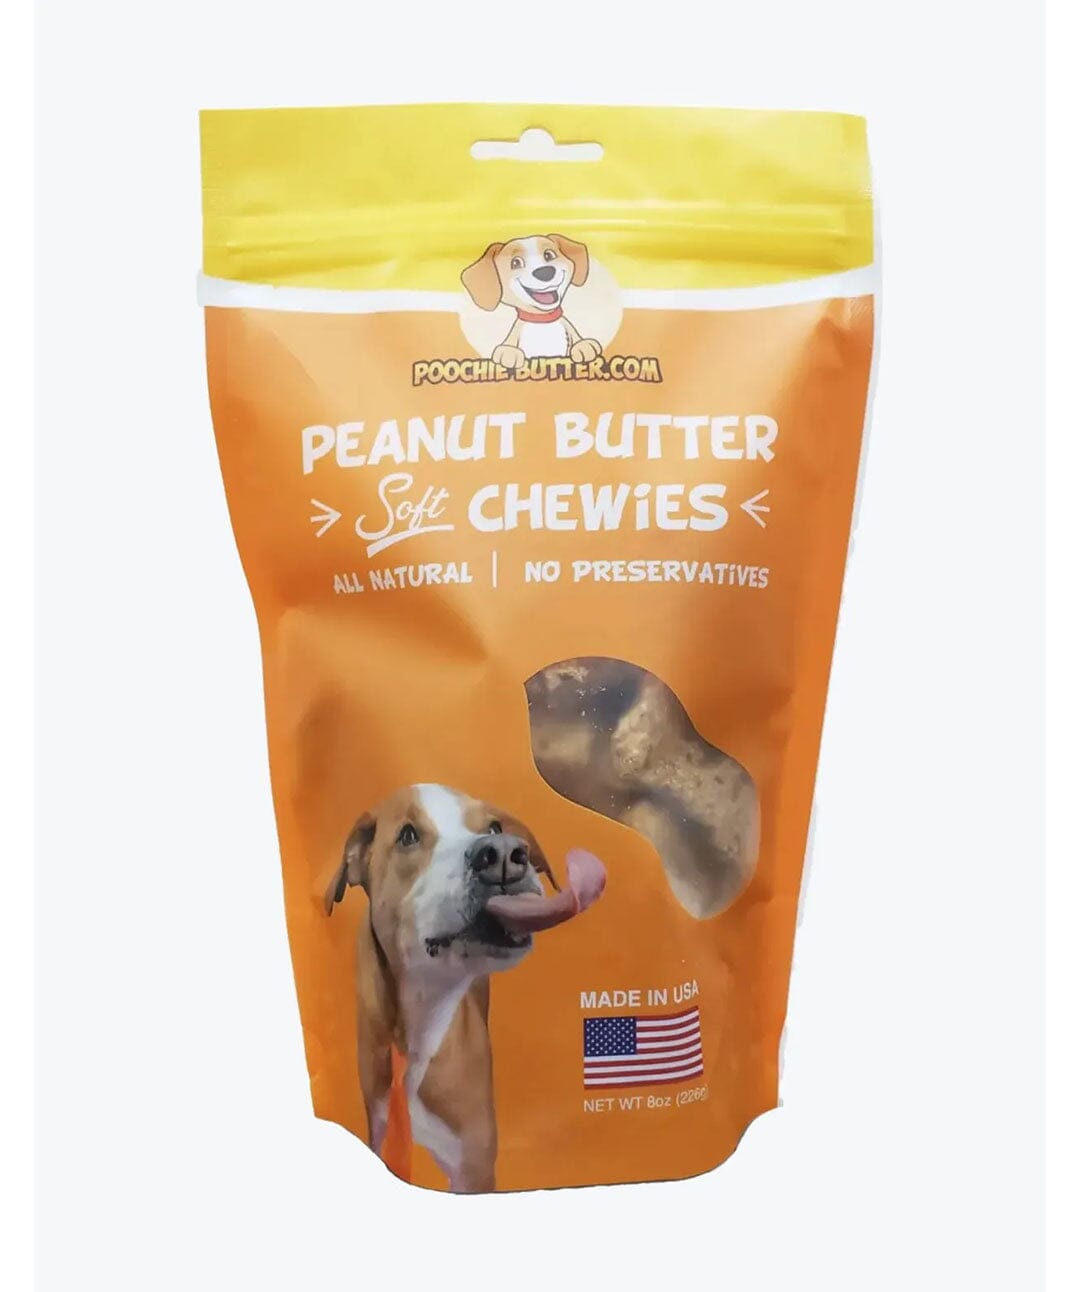 Poochie Butter Peanut Butter Soft Chewies Dog Treats Dog Treats Rover 